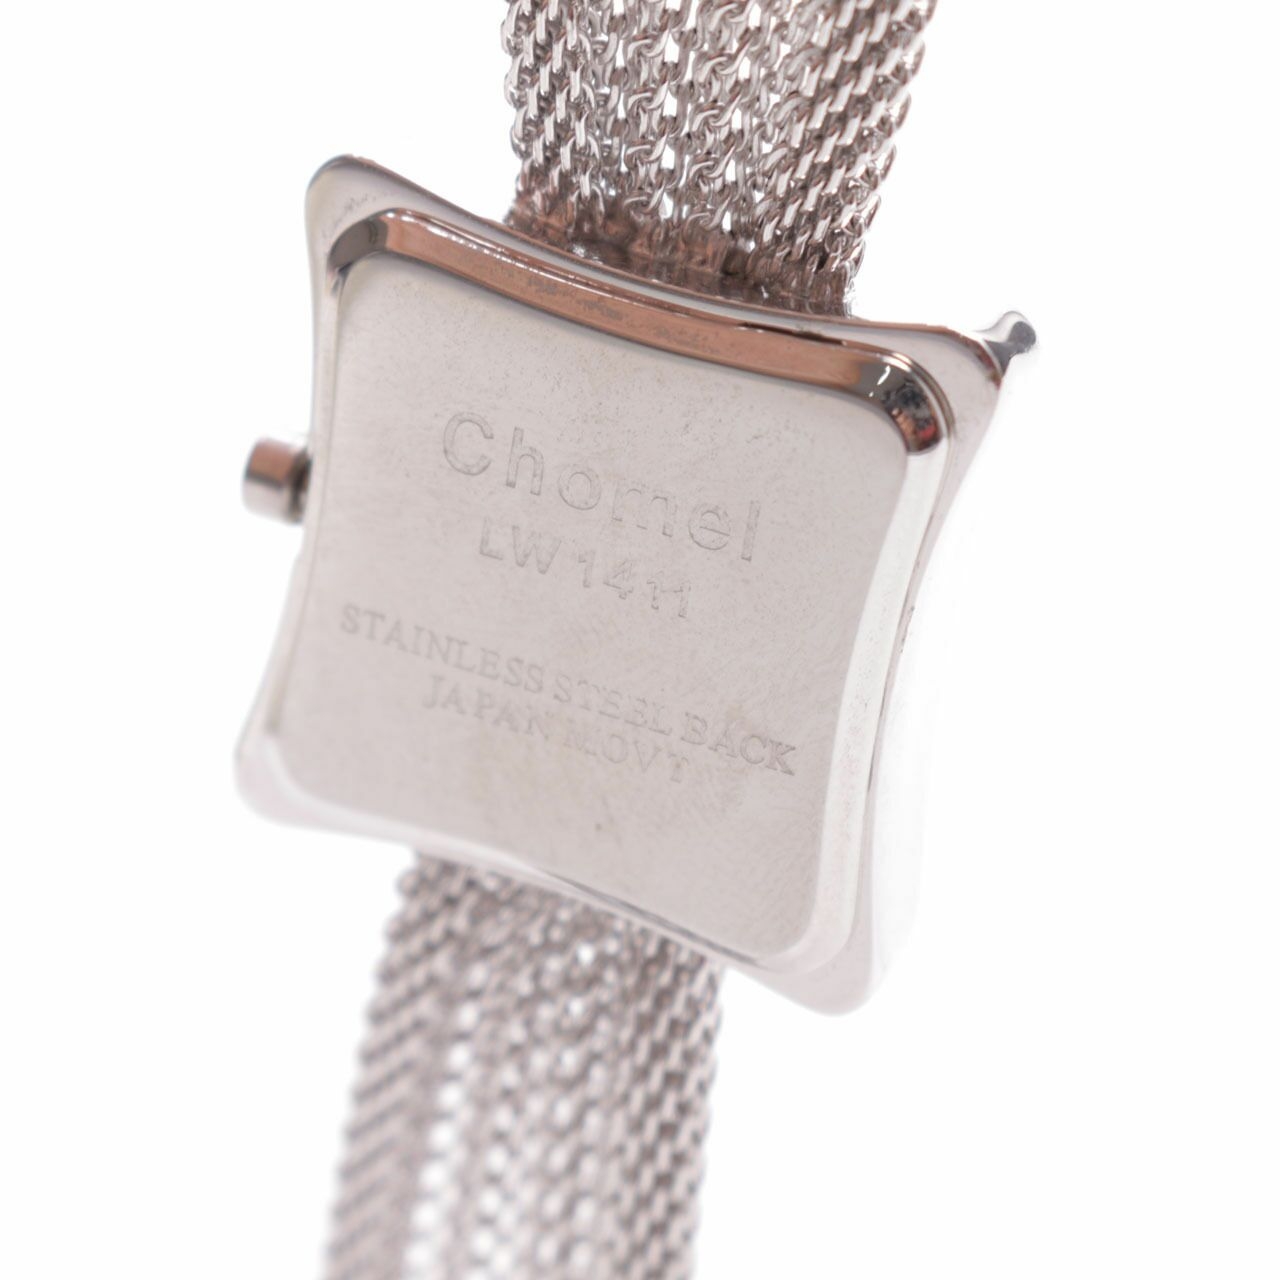 Chomel Silver Watch 